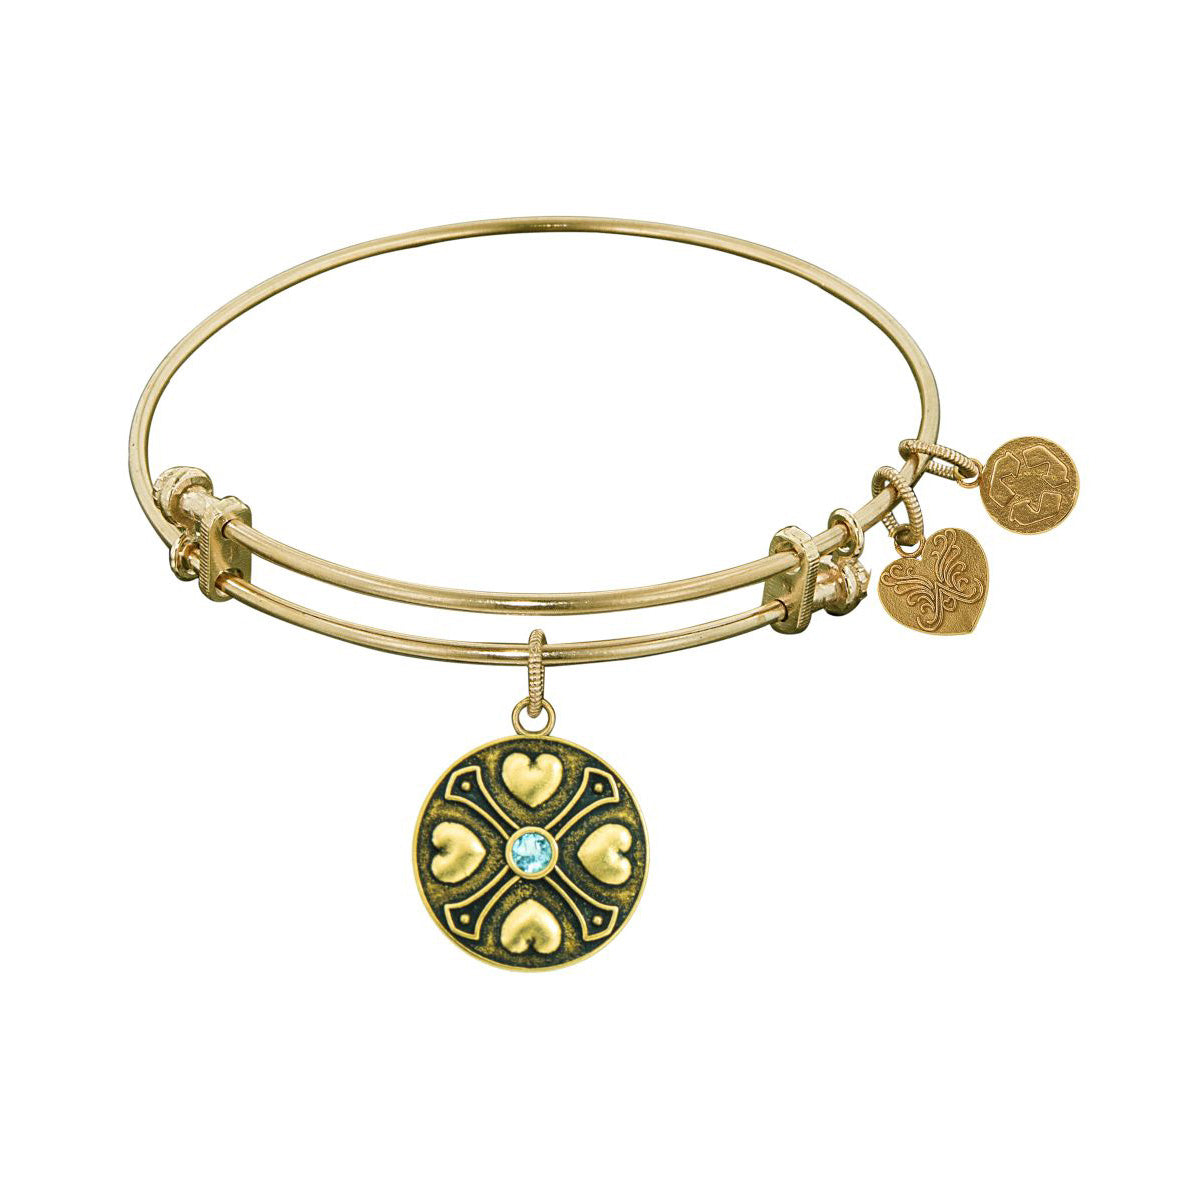 Finish Brass March Birthstone Angelica Bangle Bracelet, 7.25" fine designer jewelry for men and women